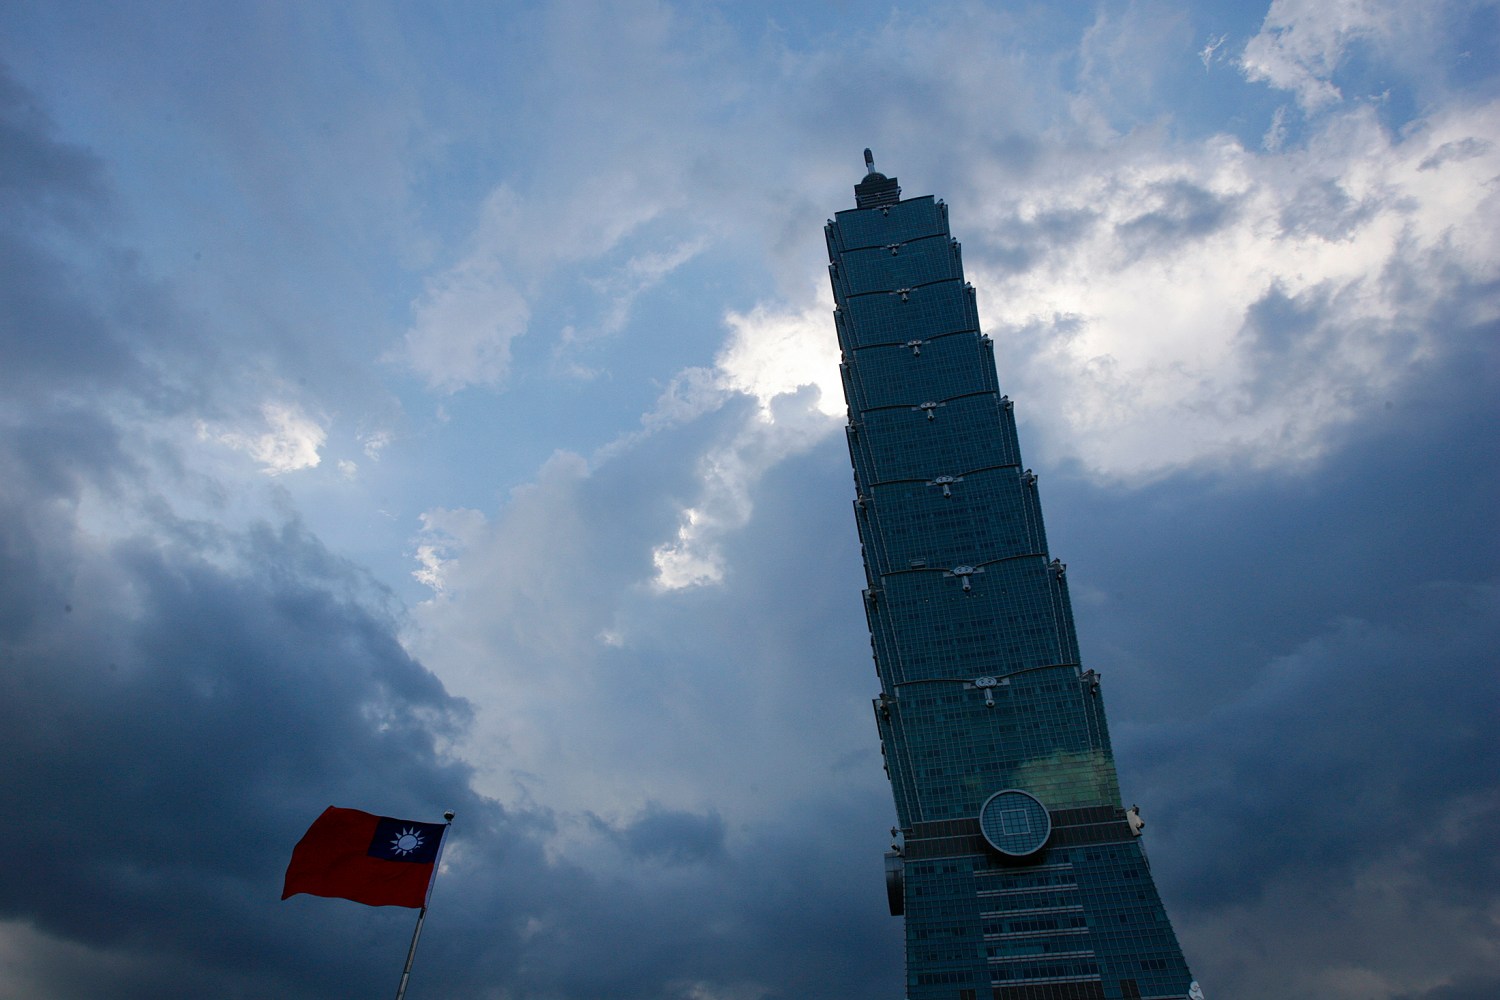 A Taiwan flag is hung beside the Taipei 101 building in Taipei.